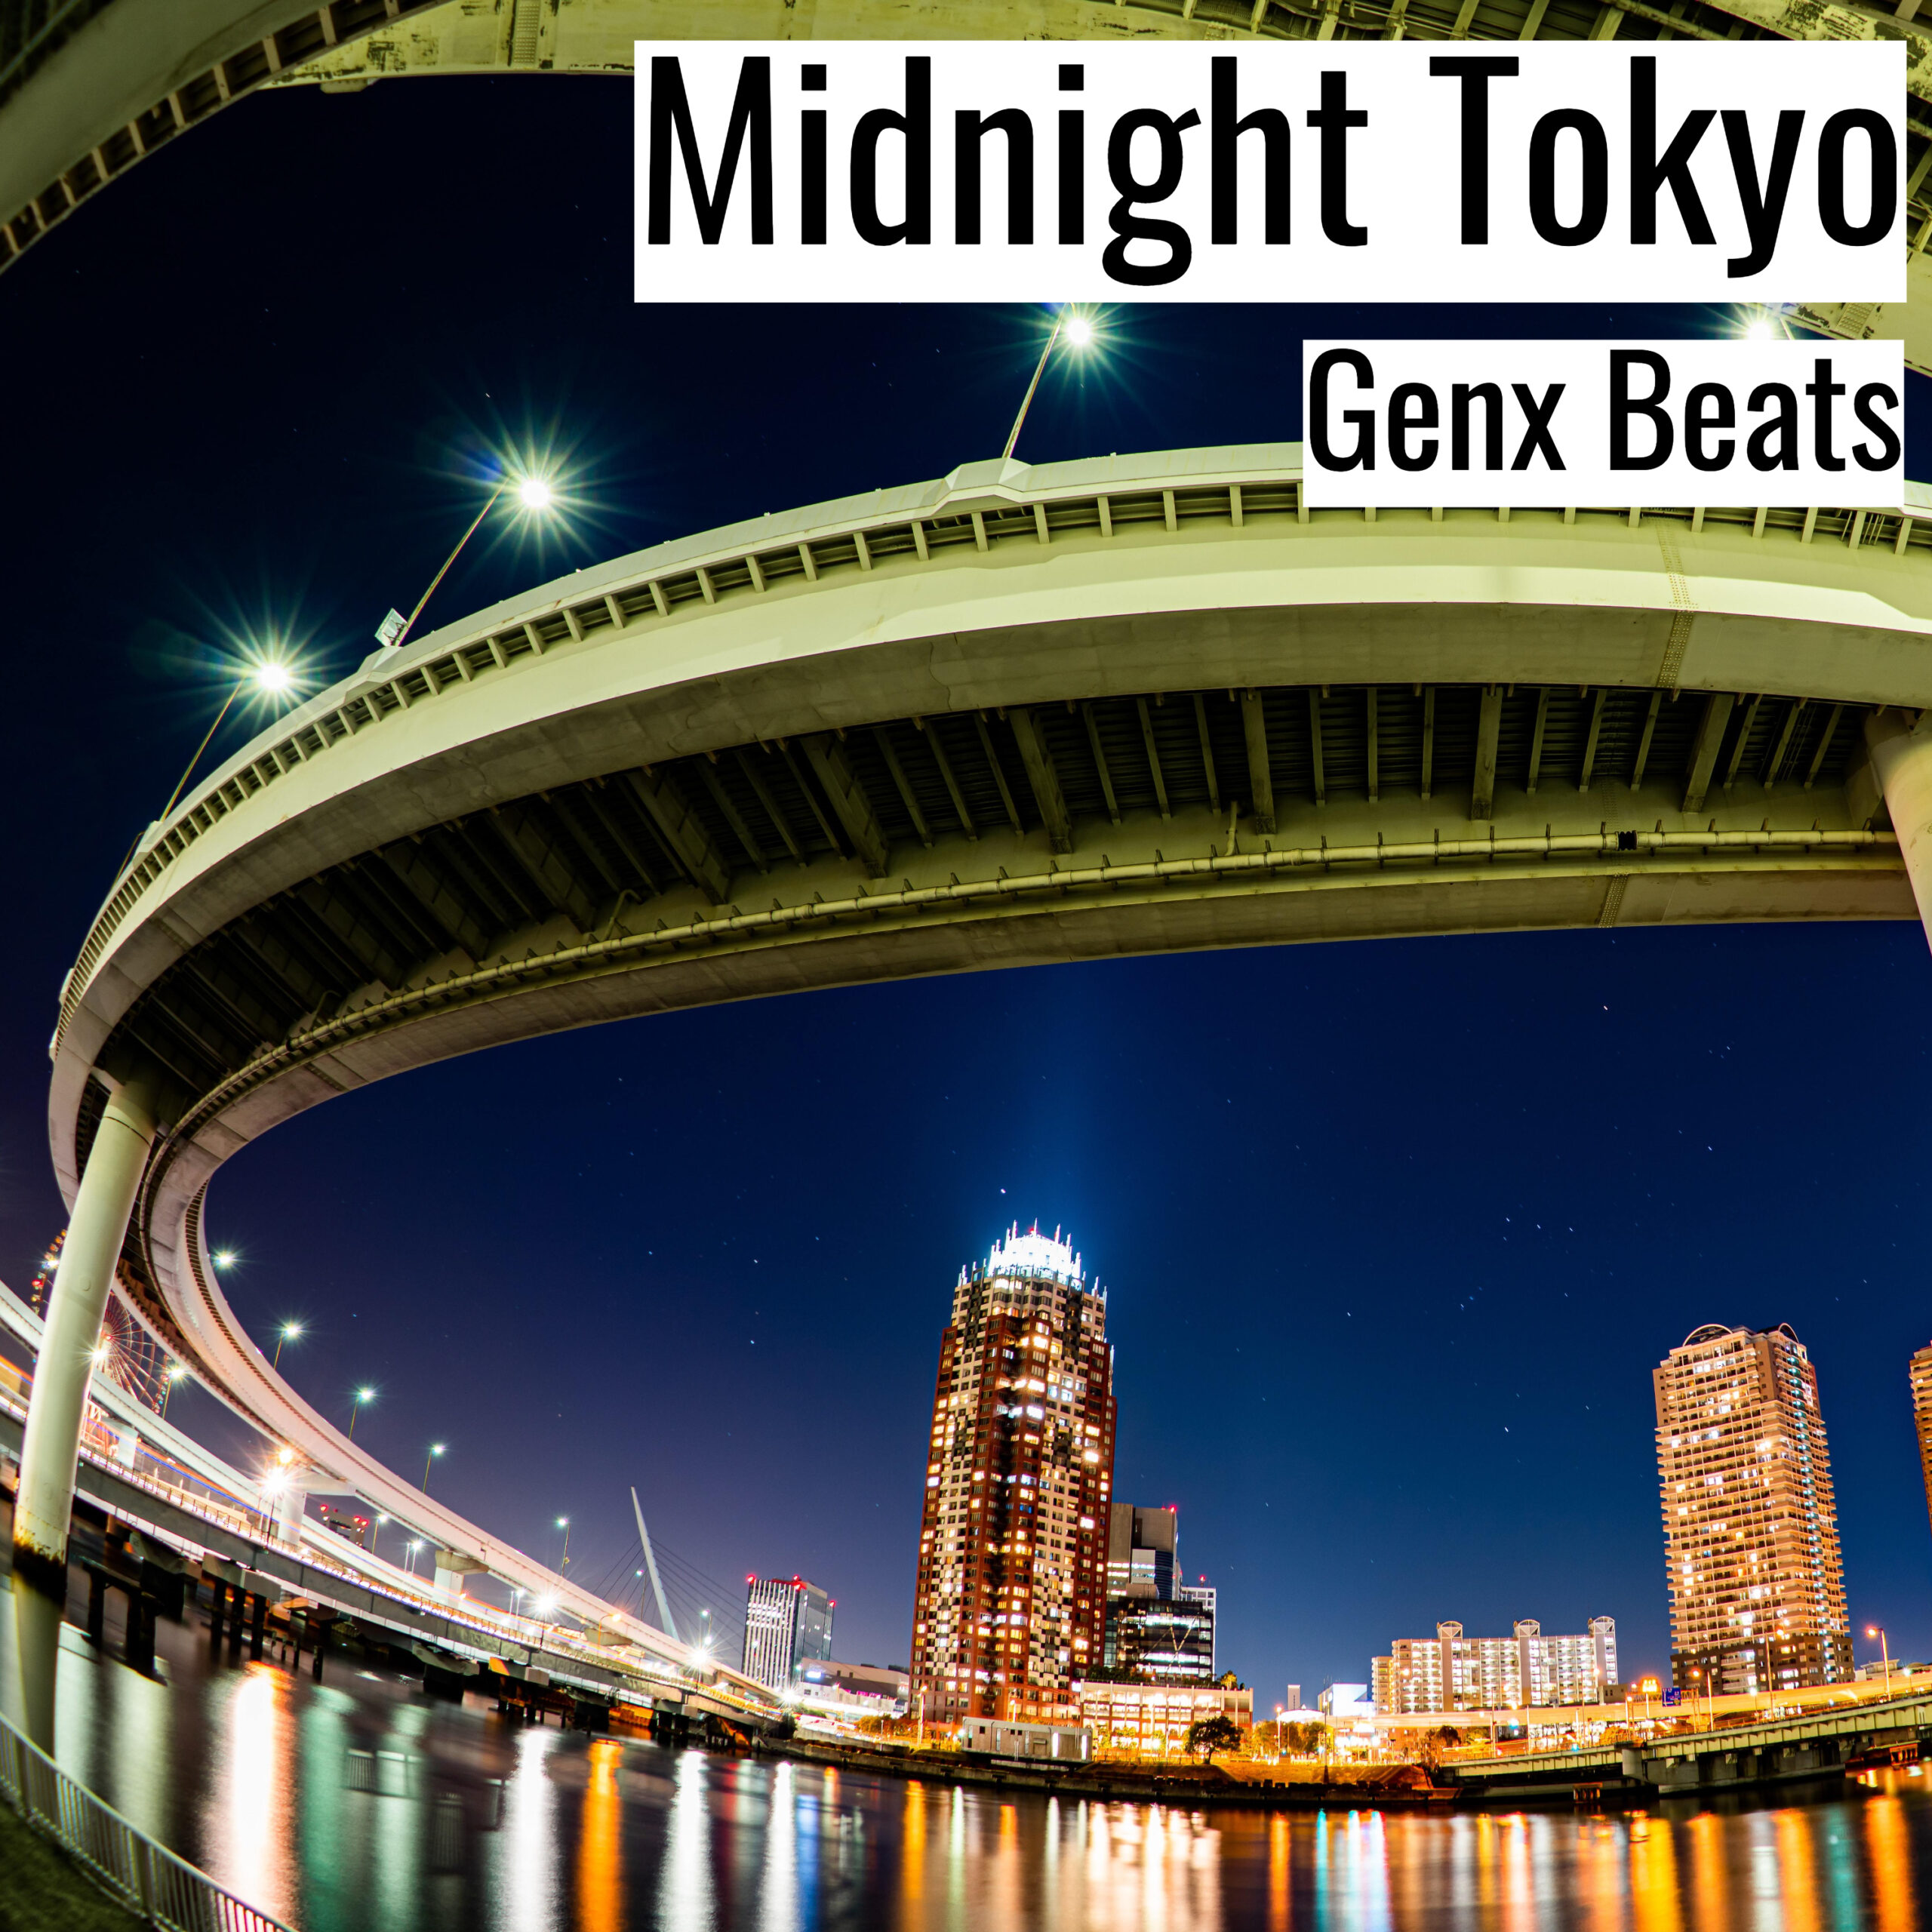 Midnight Tokyo scaled